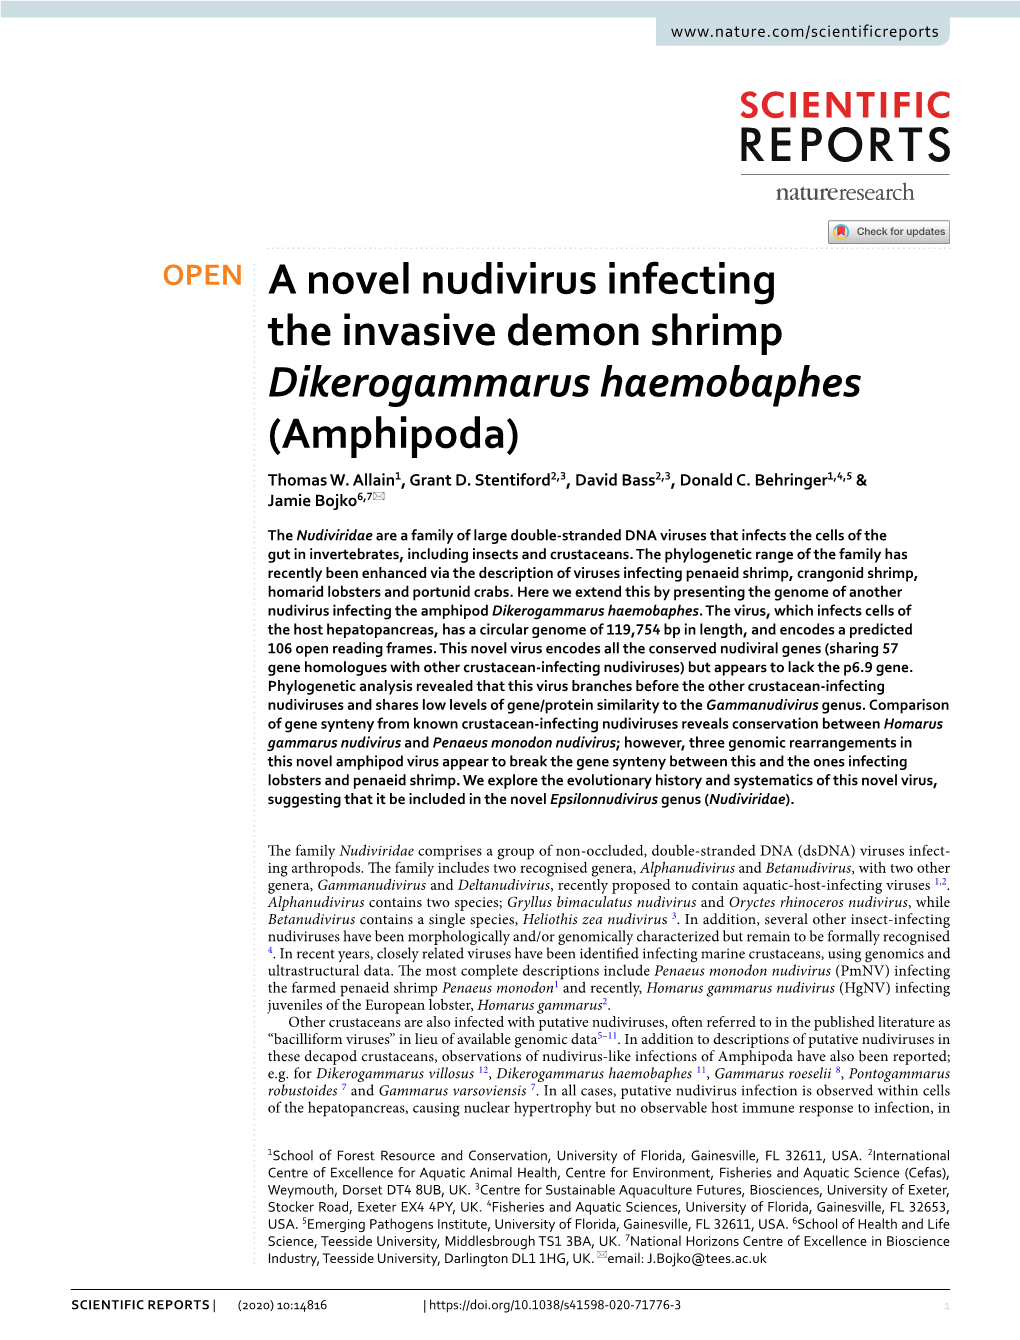 A Novel Nudivirus Infecting the Invasive Demon Shrimp Dikerogammarus Haemobaphes (Amphipoda) Thomas W